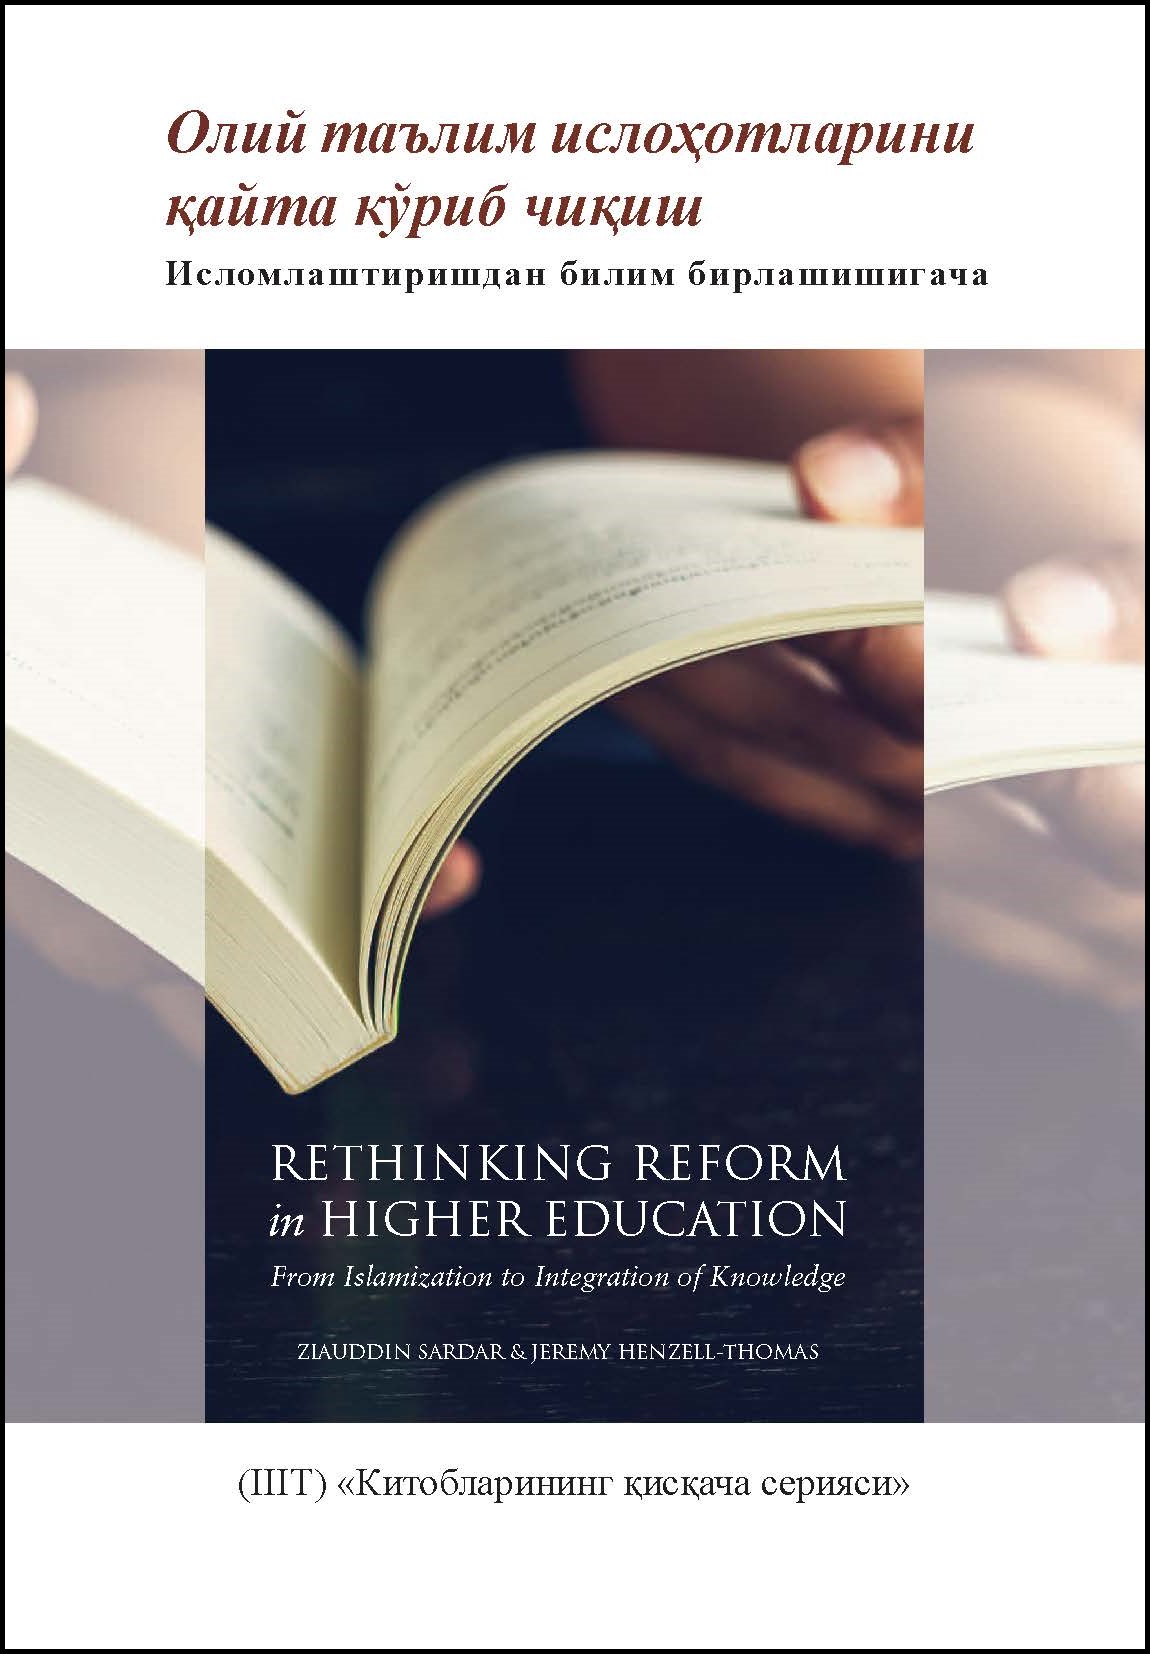 Uzbek: Китобларининг қисқача сериялари: Олий таълим ислоҳотларини қайта кўриб чиқиш: Исломлаштиришдан билимбирлашишигача (Book-in-Brief: Rethinking Reform in Higher Education: From Islamization to Integration of Knowledge)